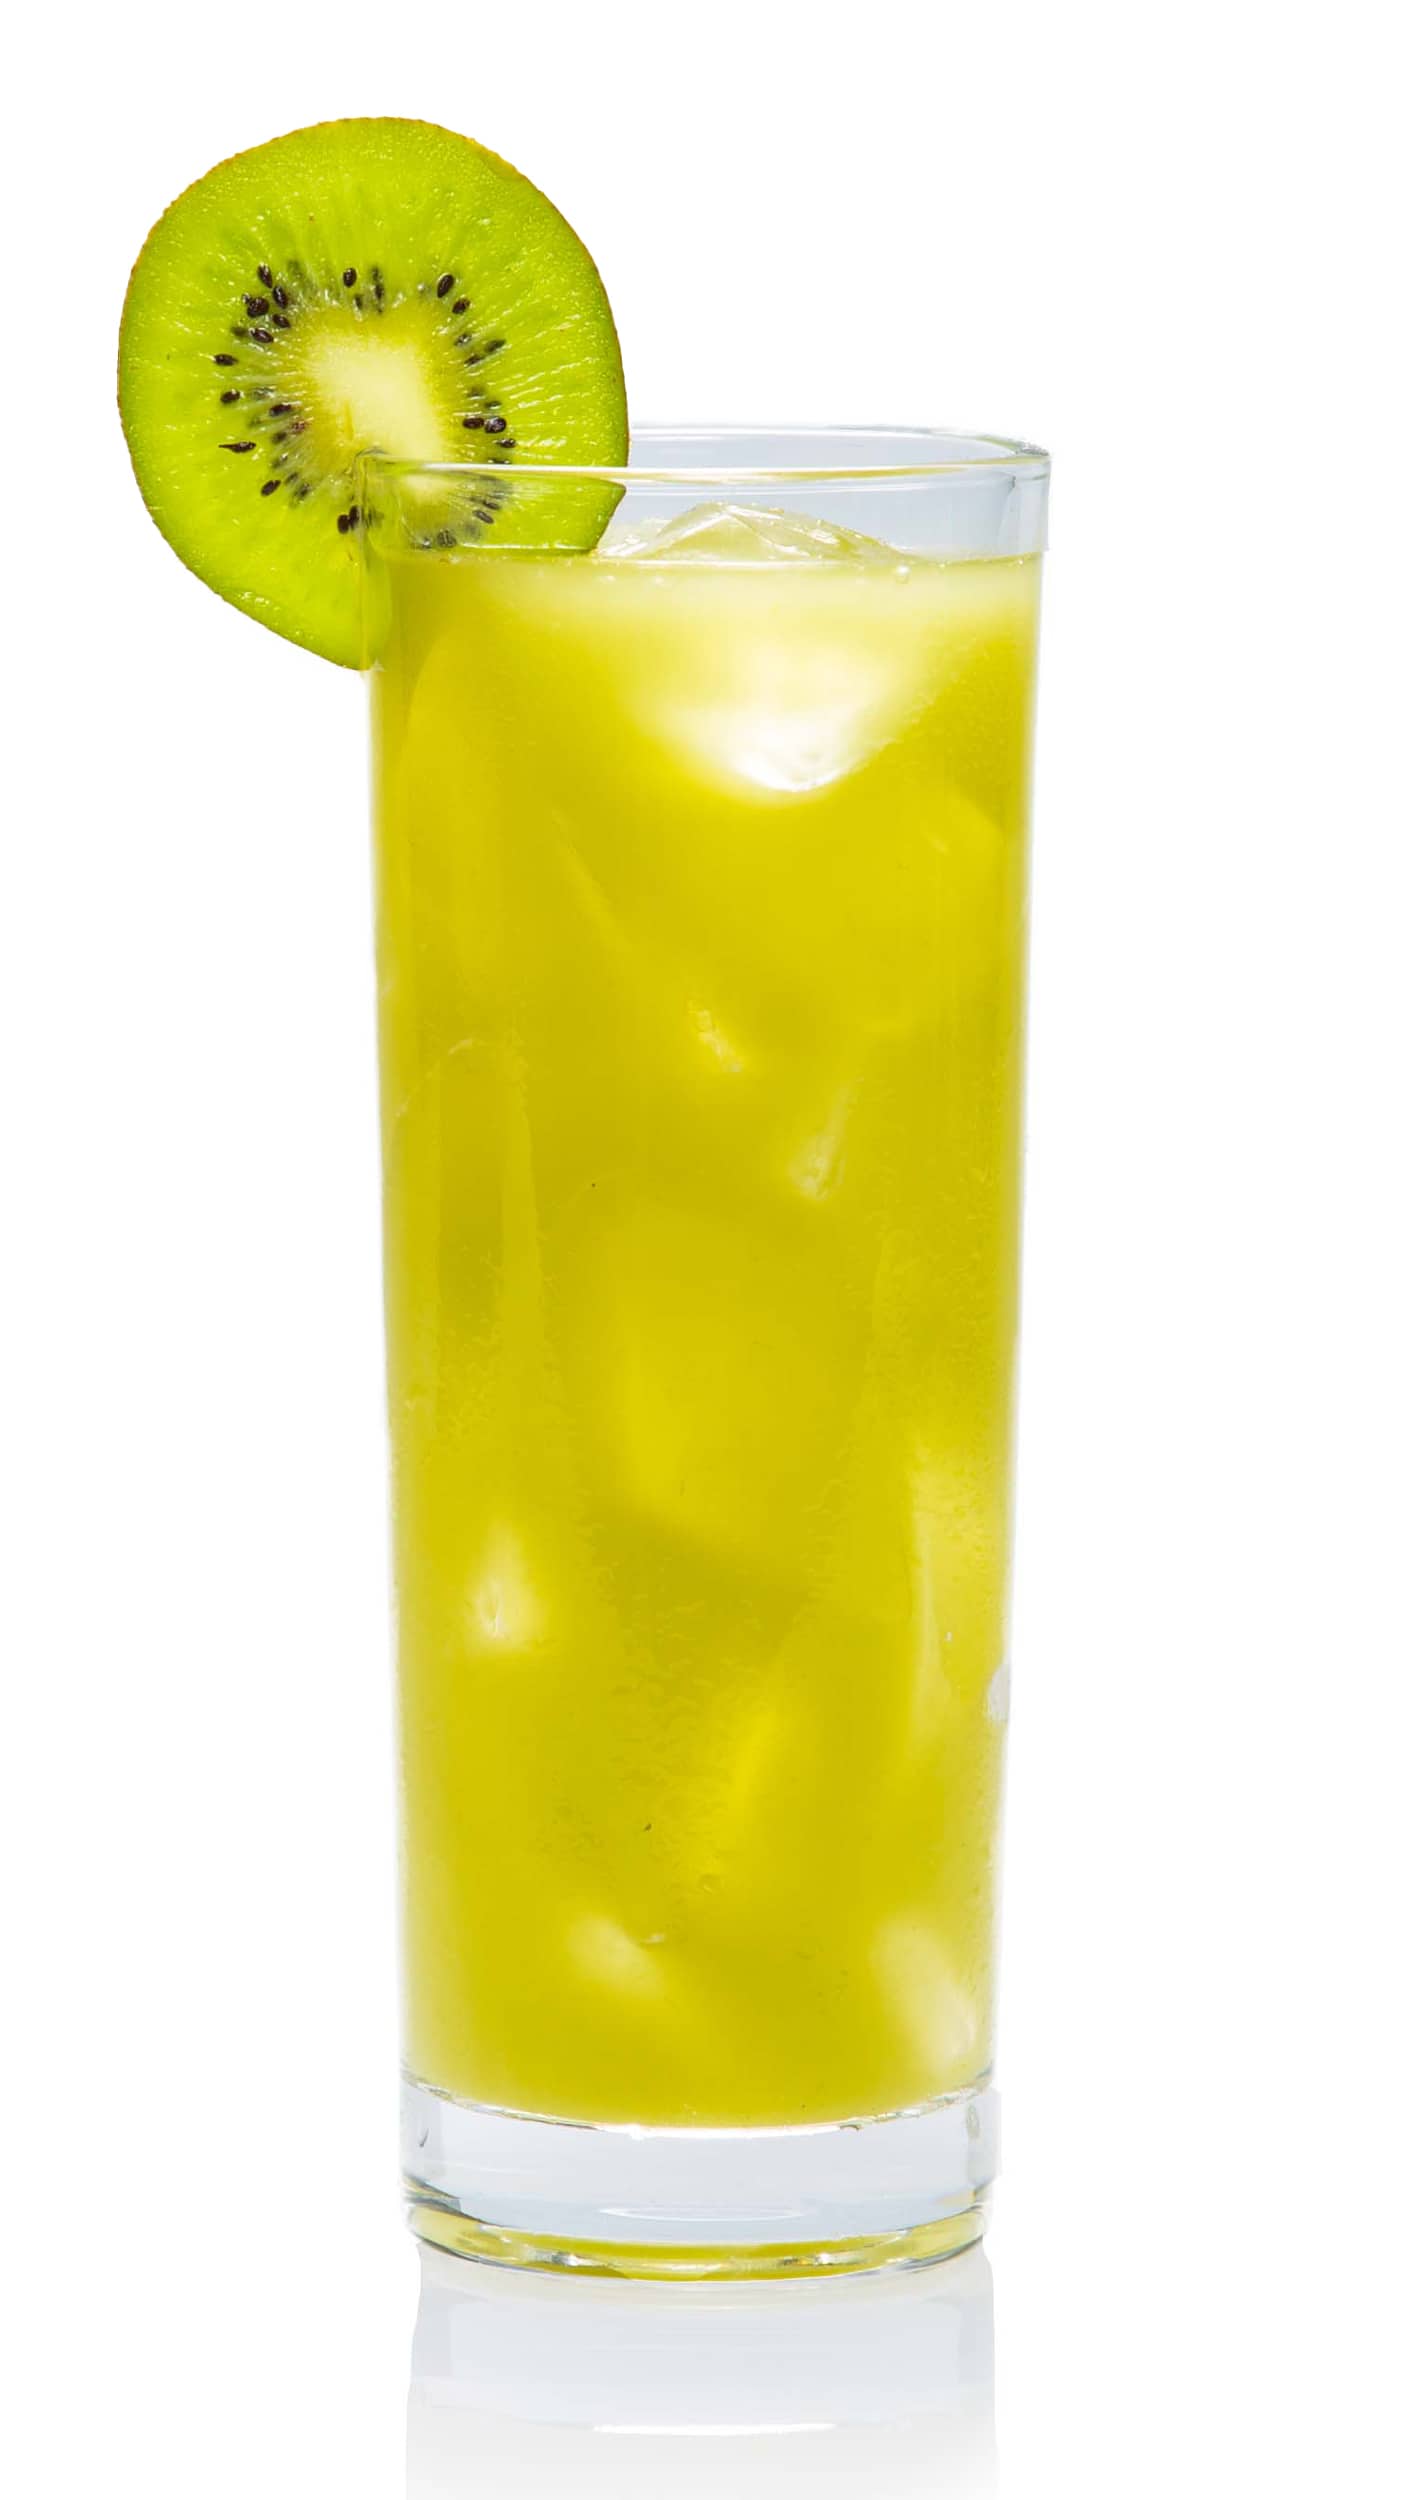 Kiwi sweet sour drink with EFFEN Cucumber Vodka, maraschino liqueur, kiwi and fresh lime juice.